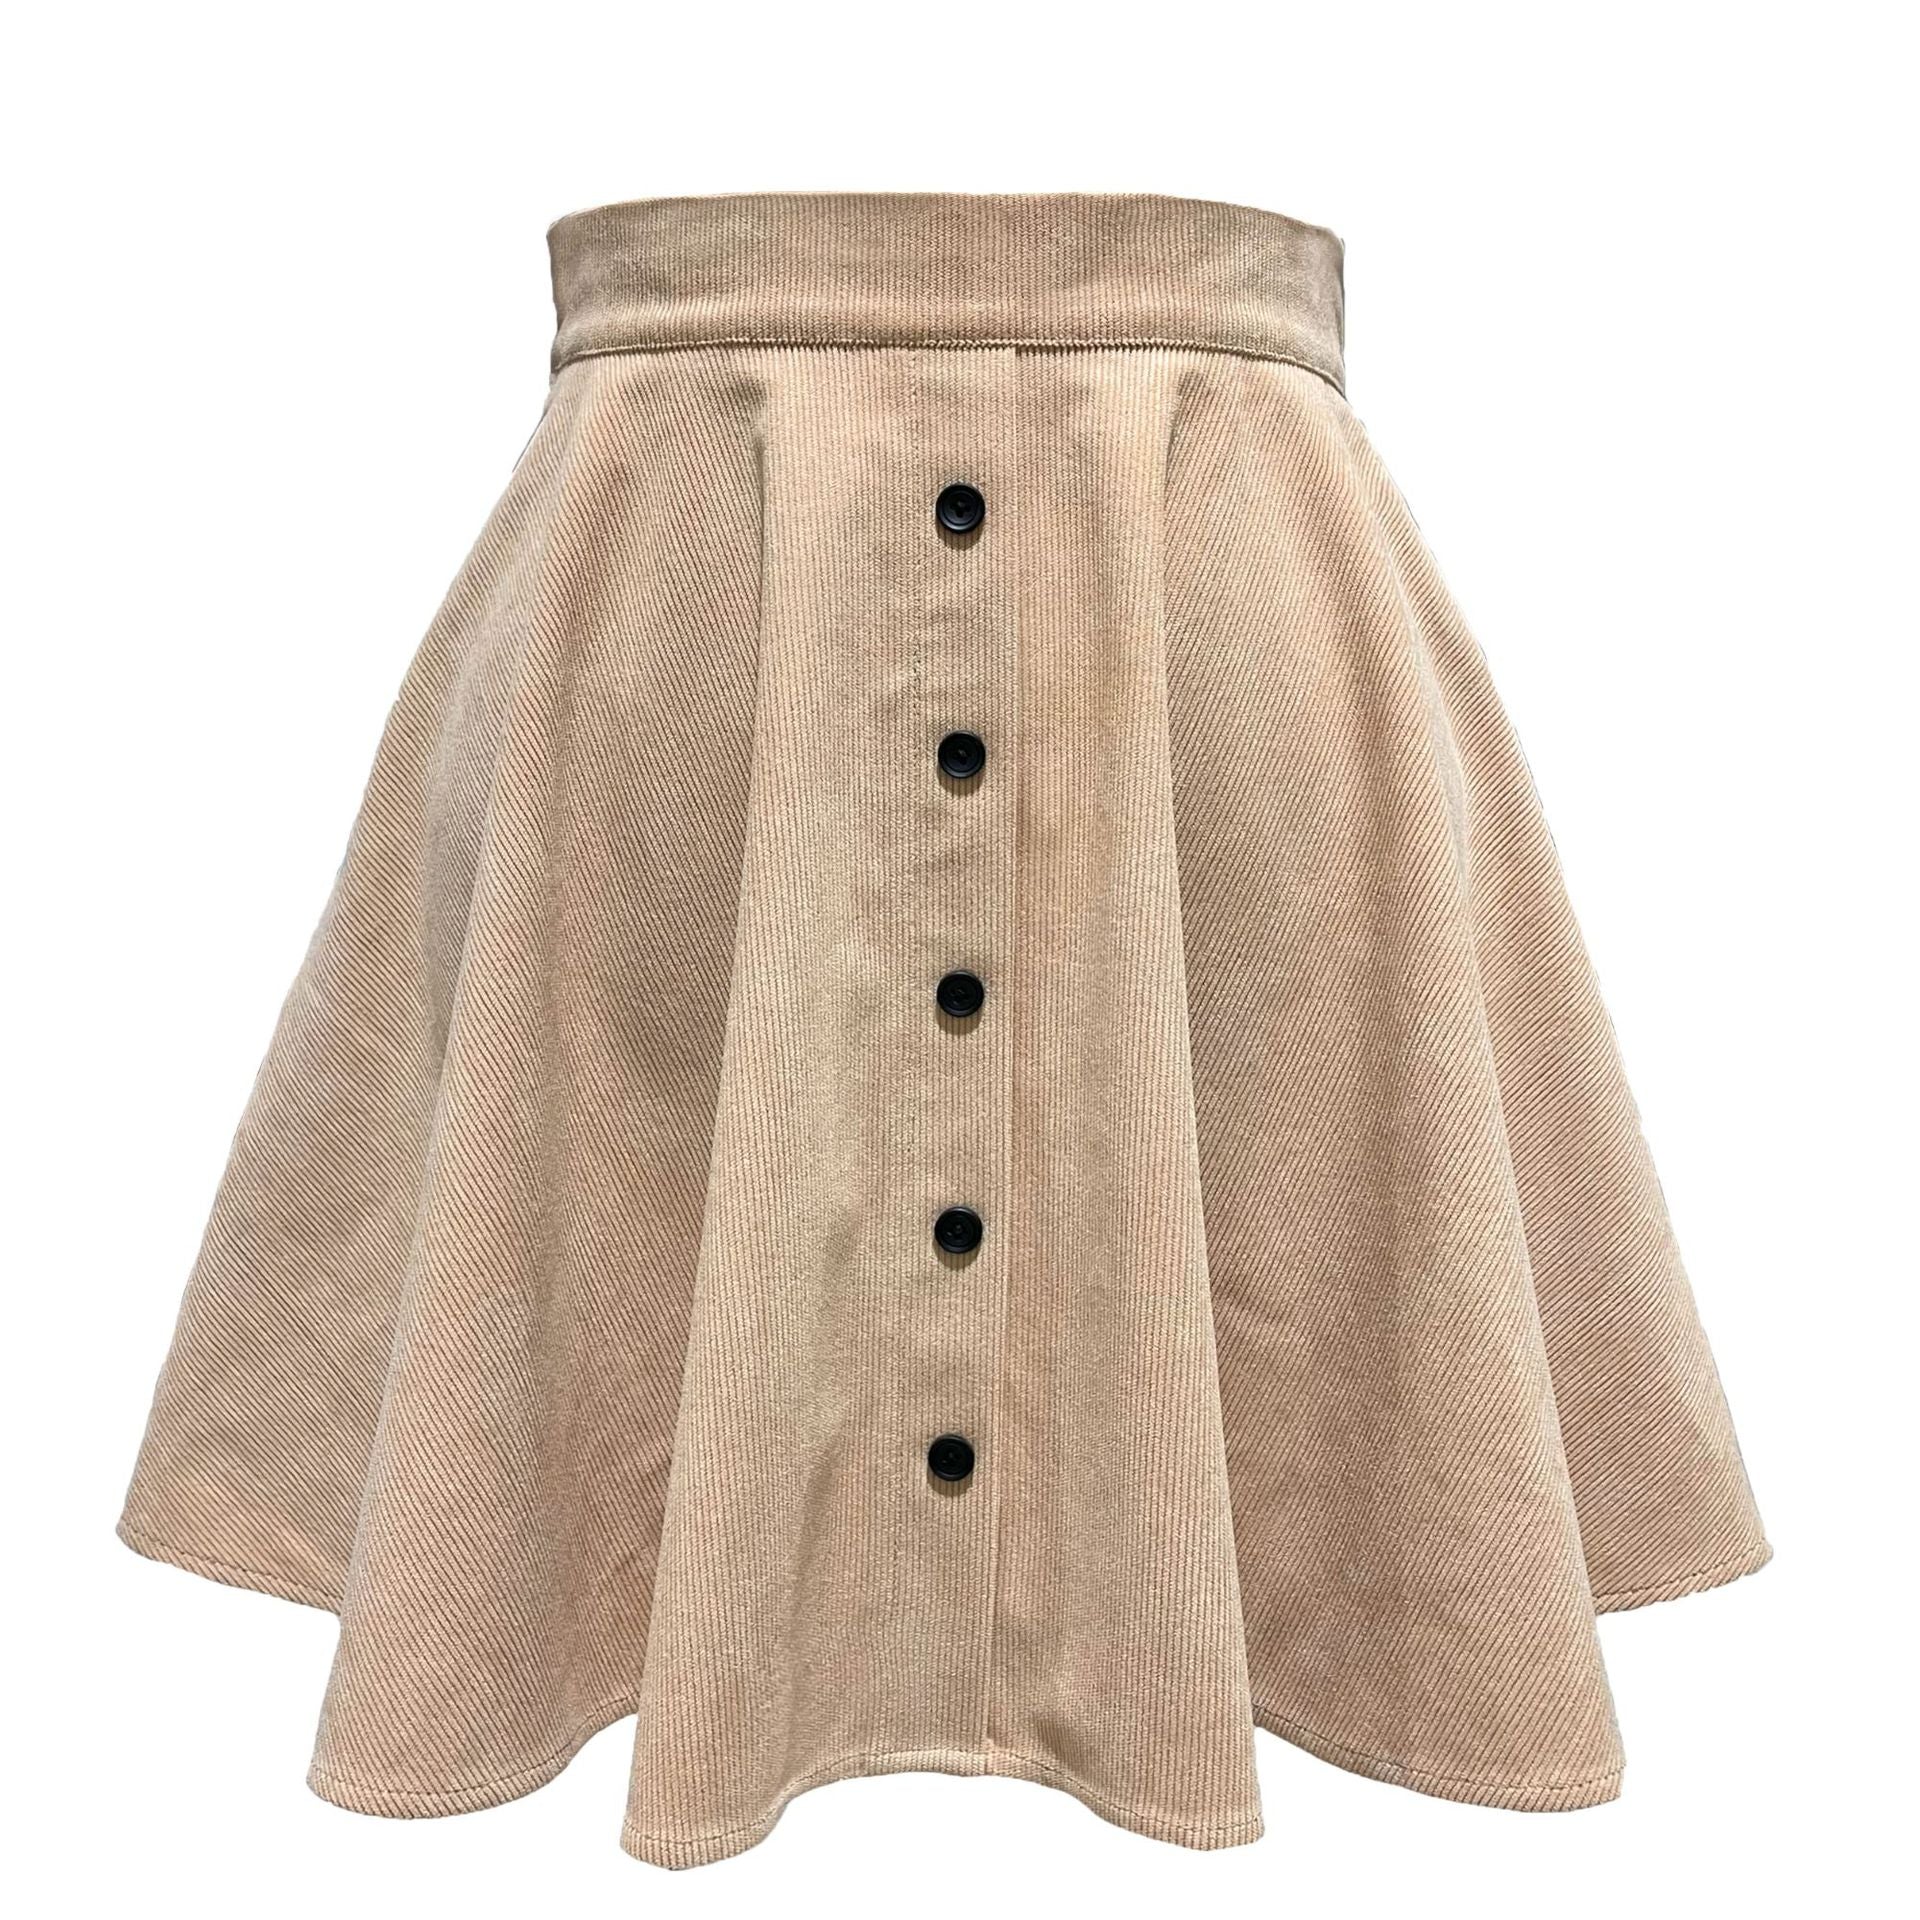 Women's Color Corduroy Fashion Sweet Single Button High Skirts